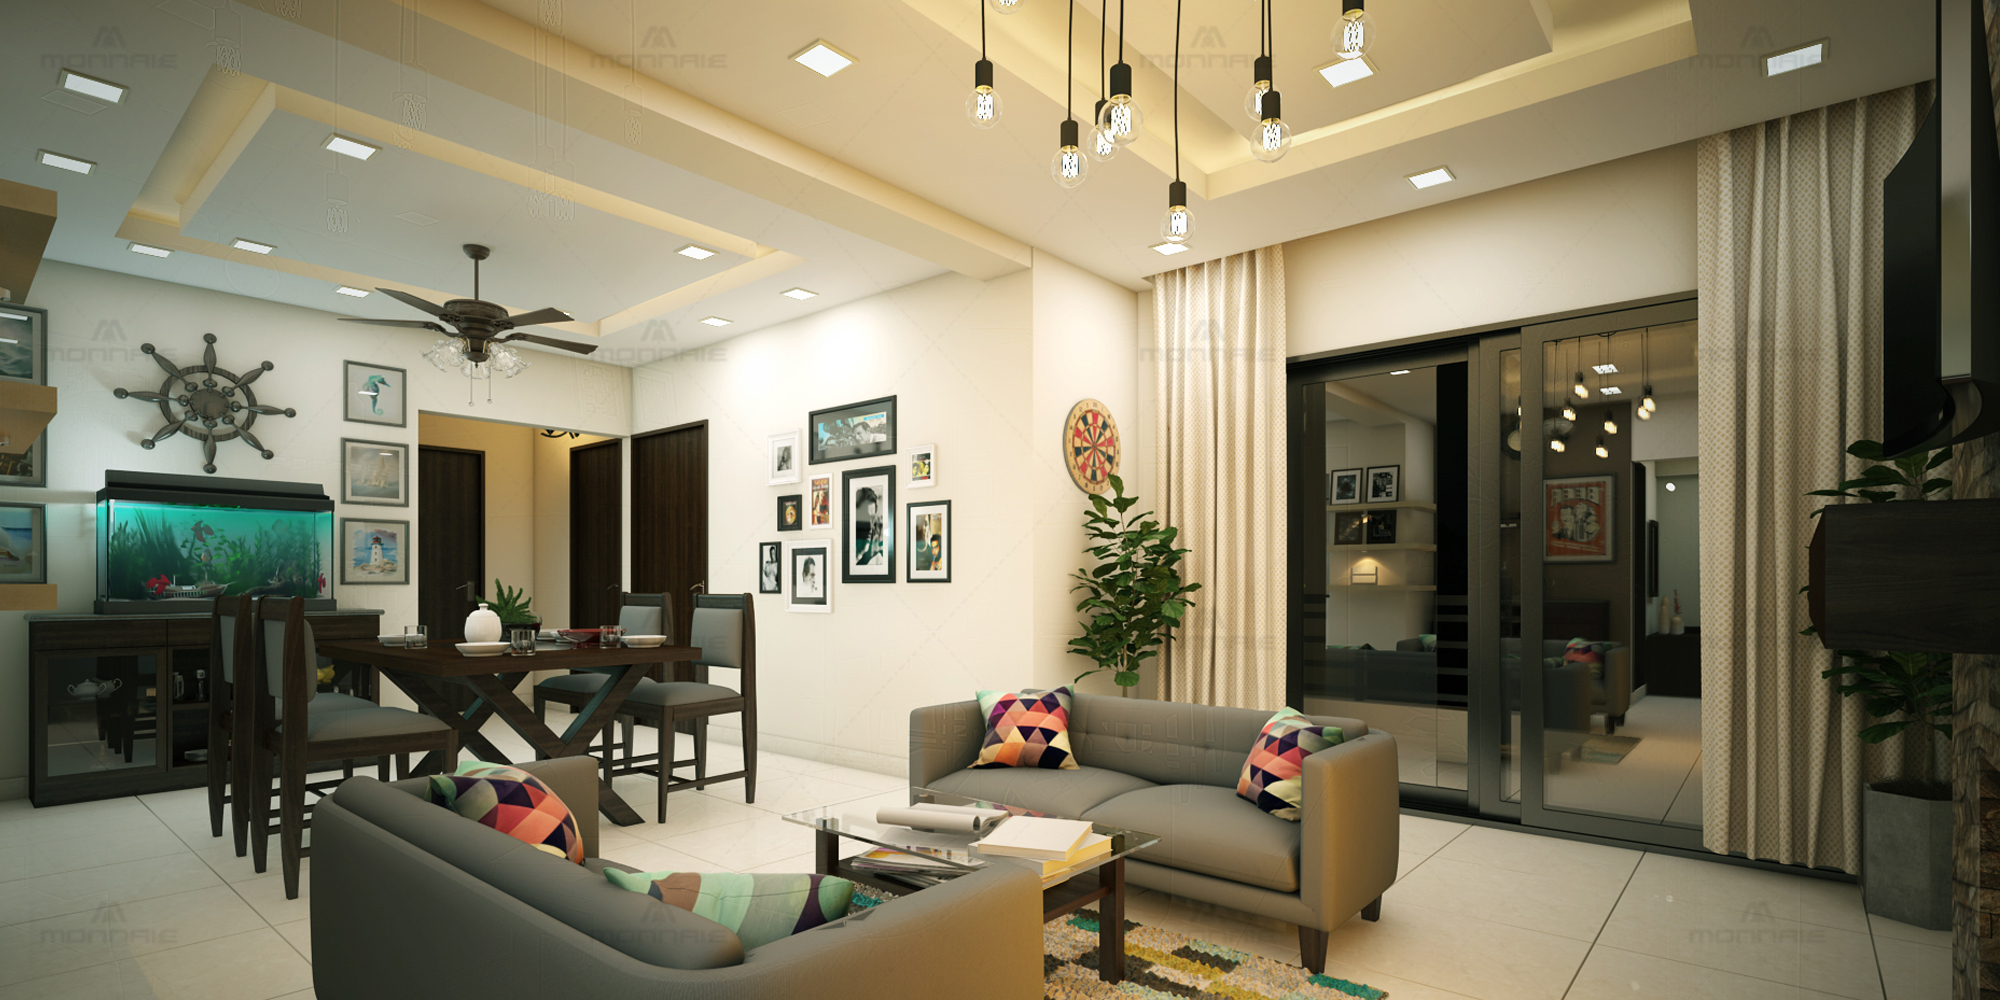 Kerala home interior ideas to make a small room look bigger - Architects in  Kerala